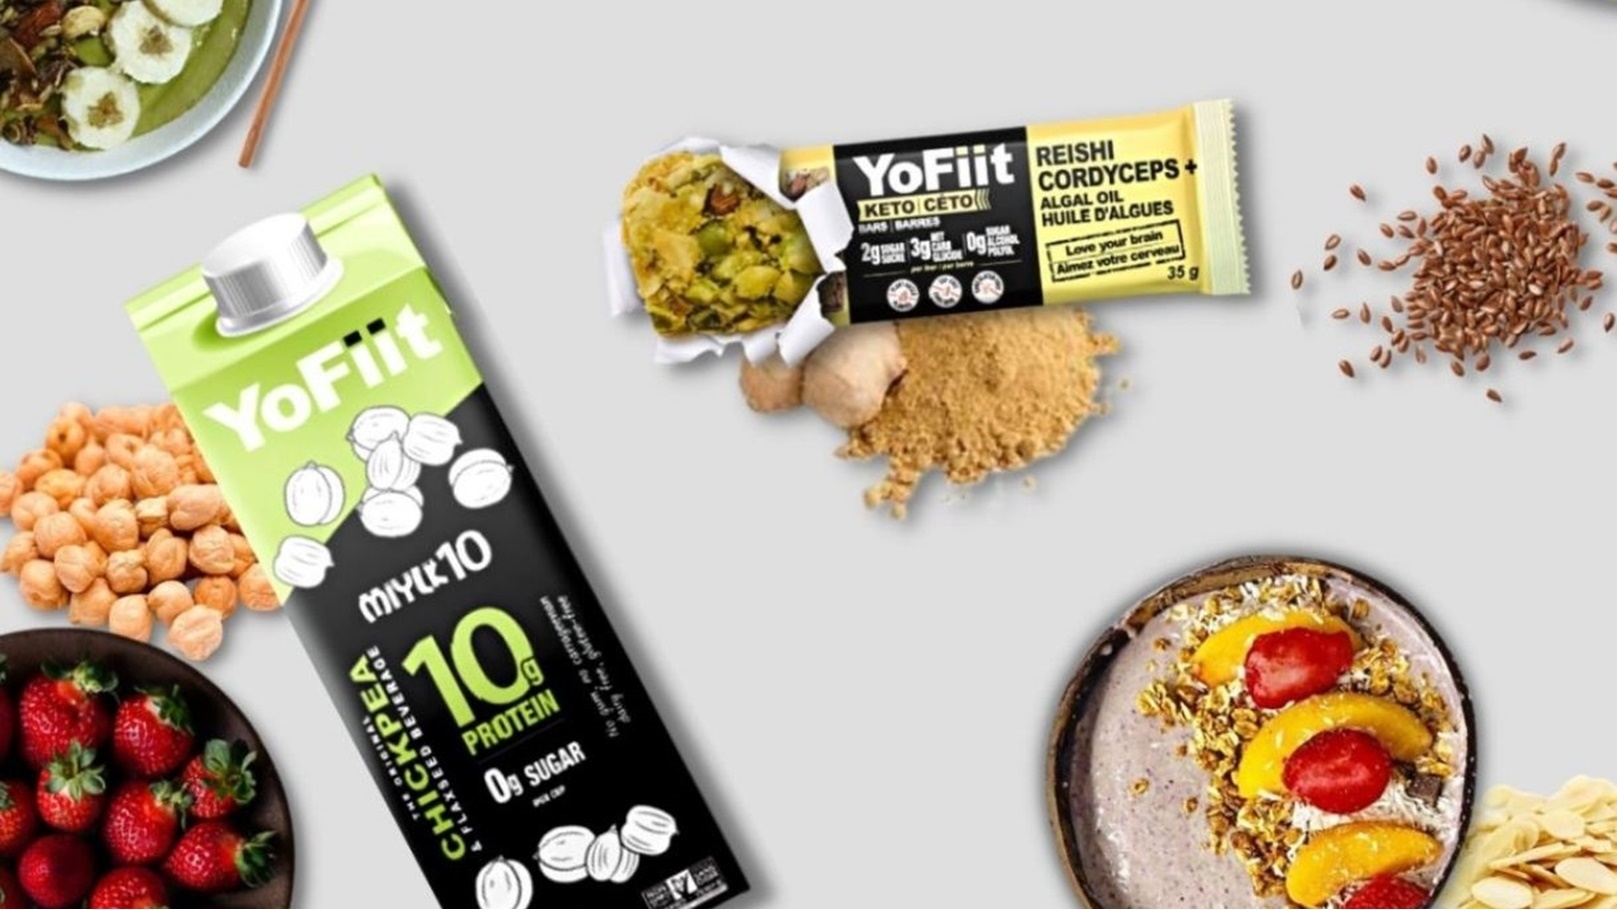 YoFiit products